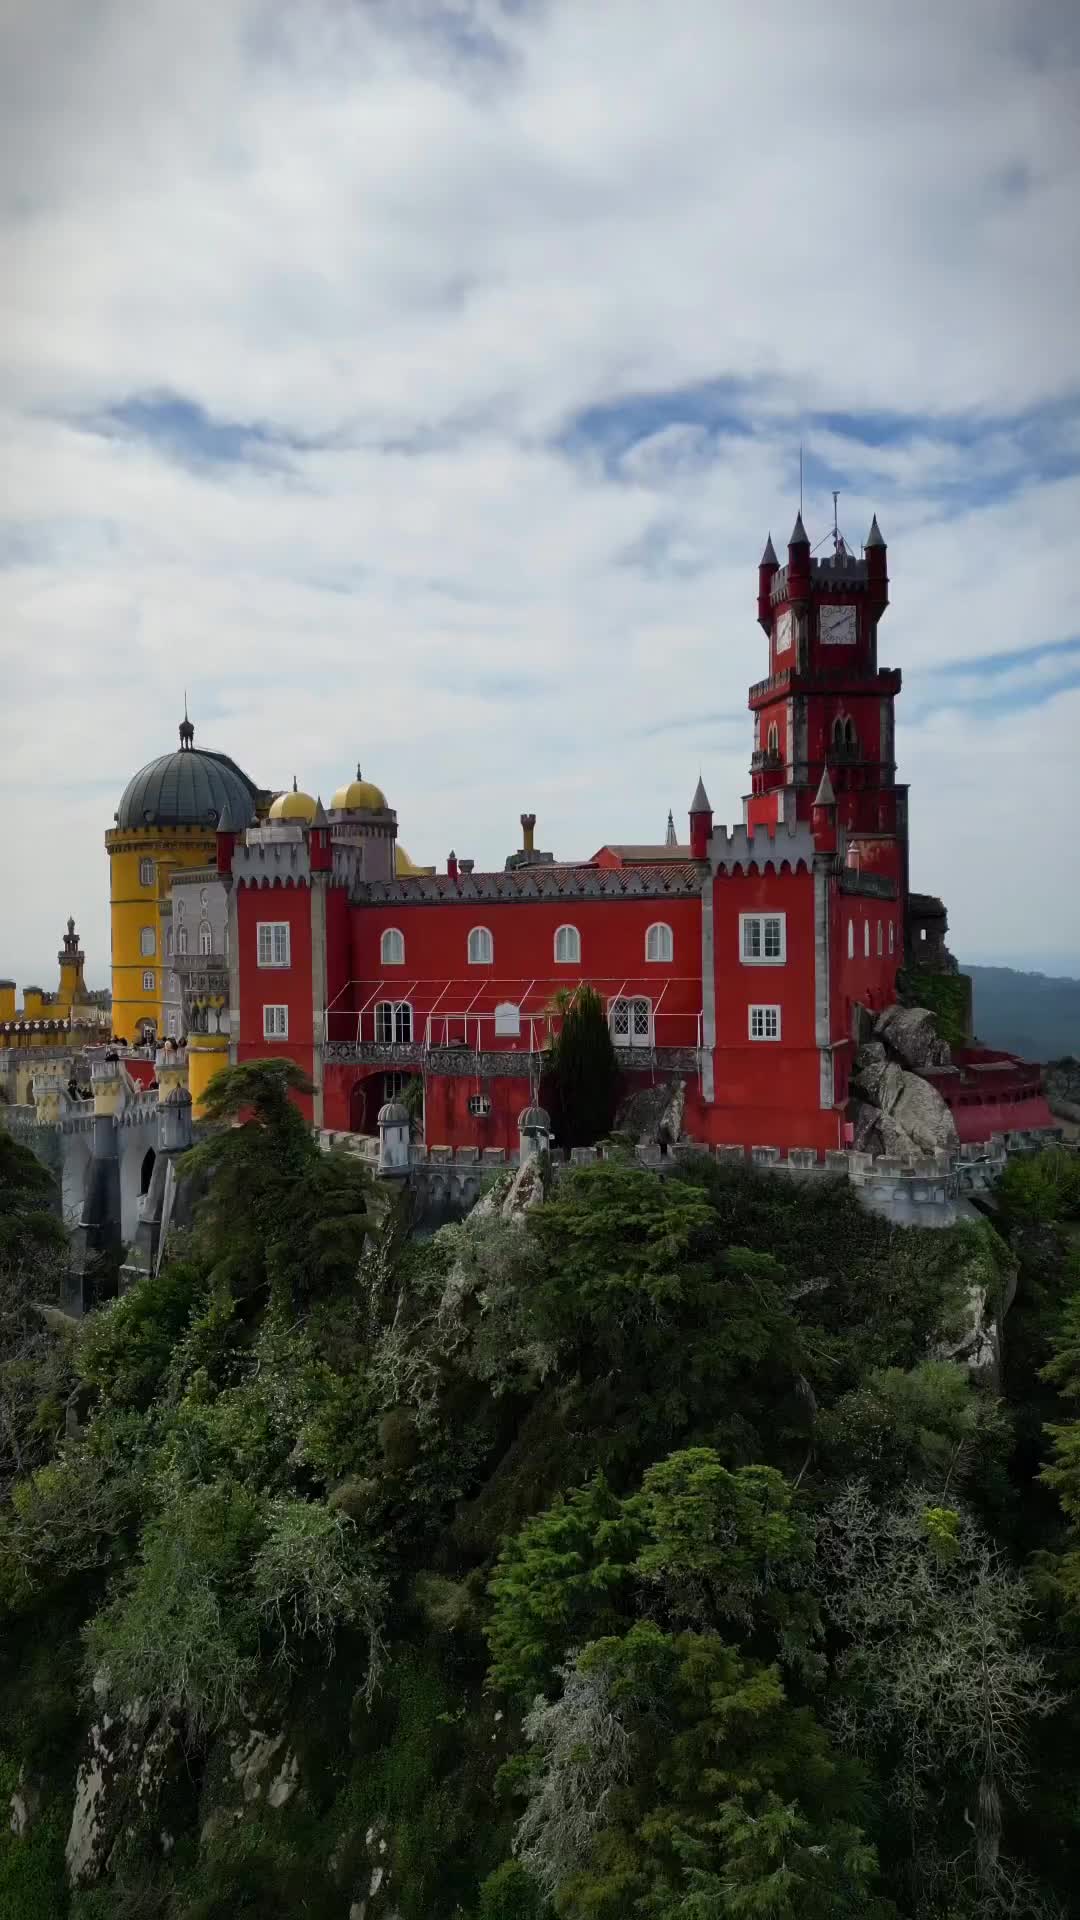 Explore Palácio Da Pena: Sintra's Magical Castle